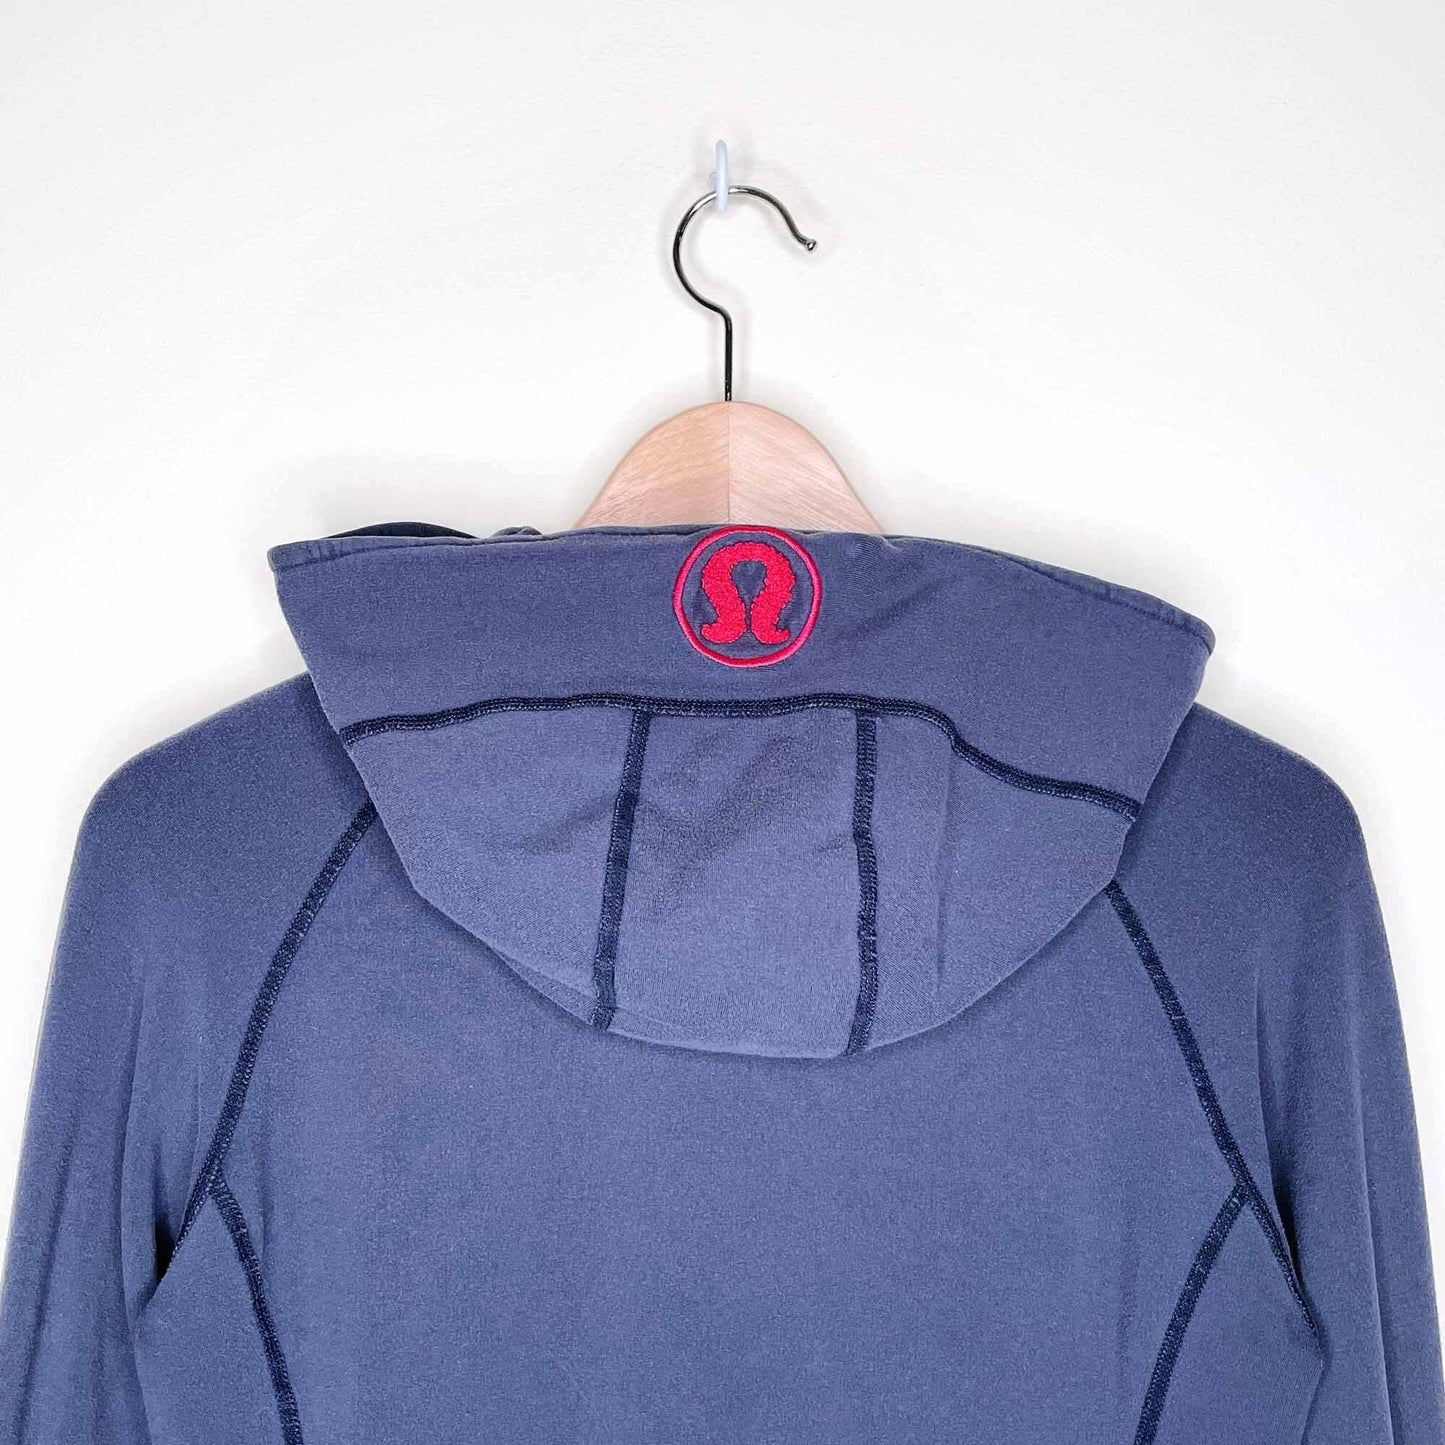 lululemon stretch zip up hooded sweatshirt - size 4